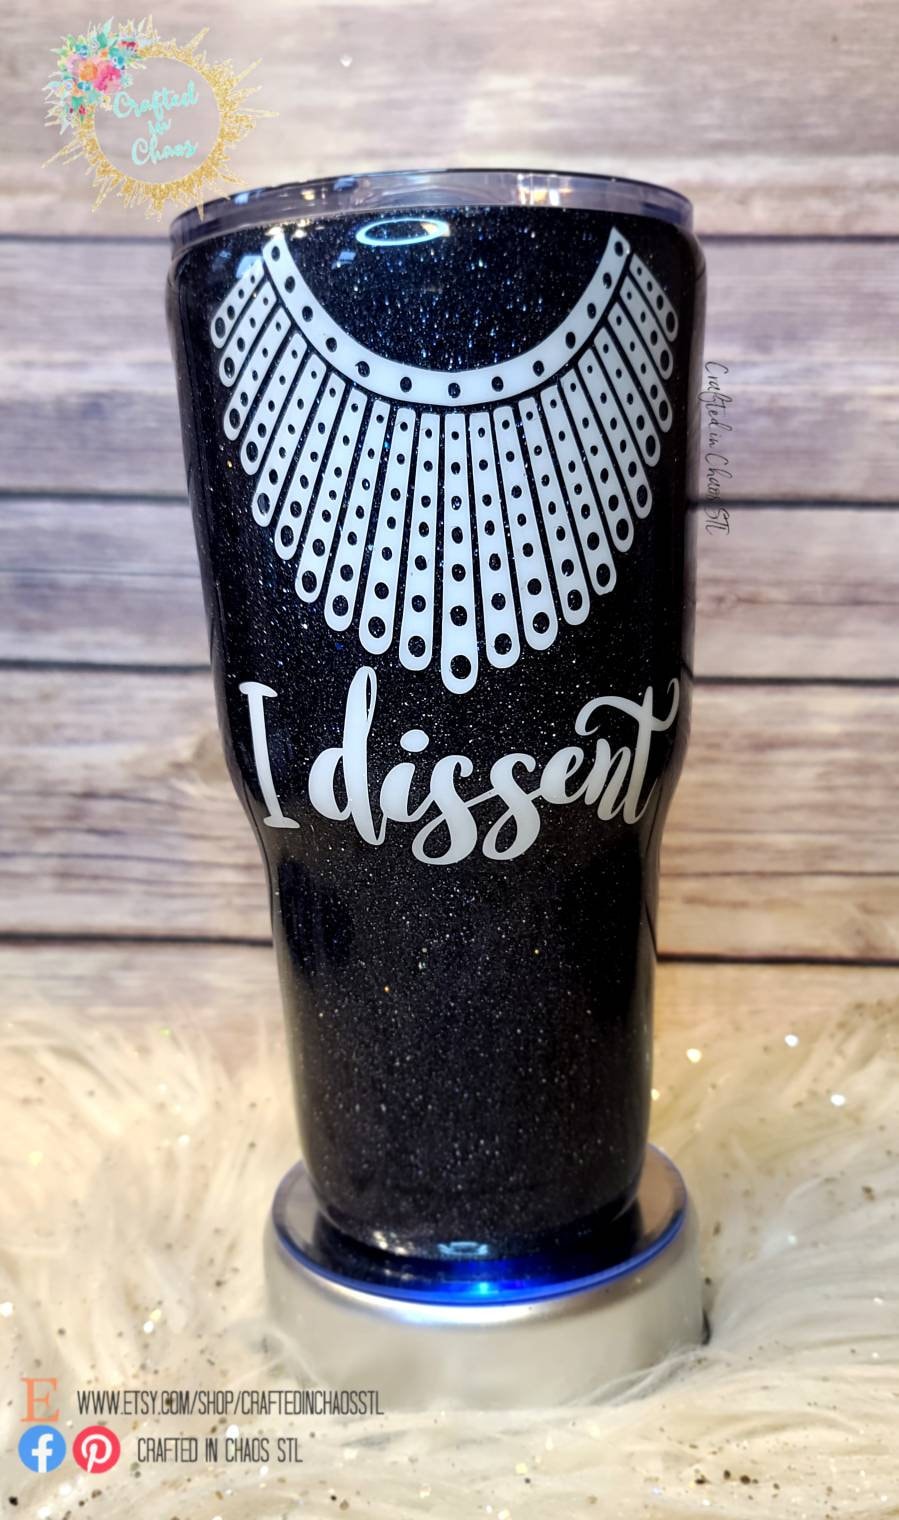 I dissent custom engraved wine tumbler, RBG Wine Glass, matte black Wi –  GlitterGiftsAndMore